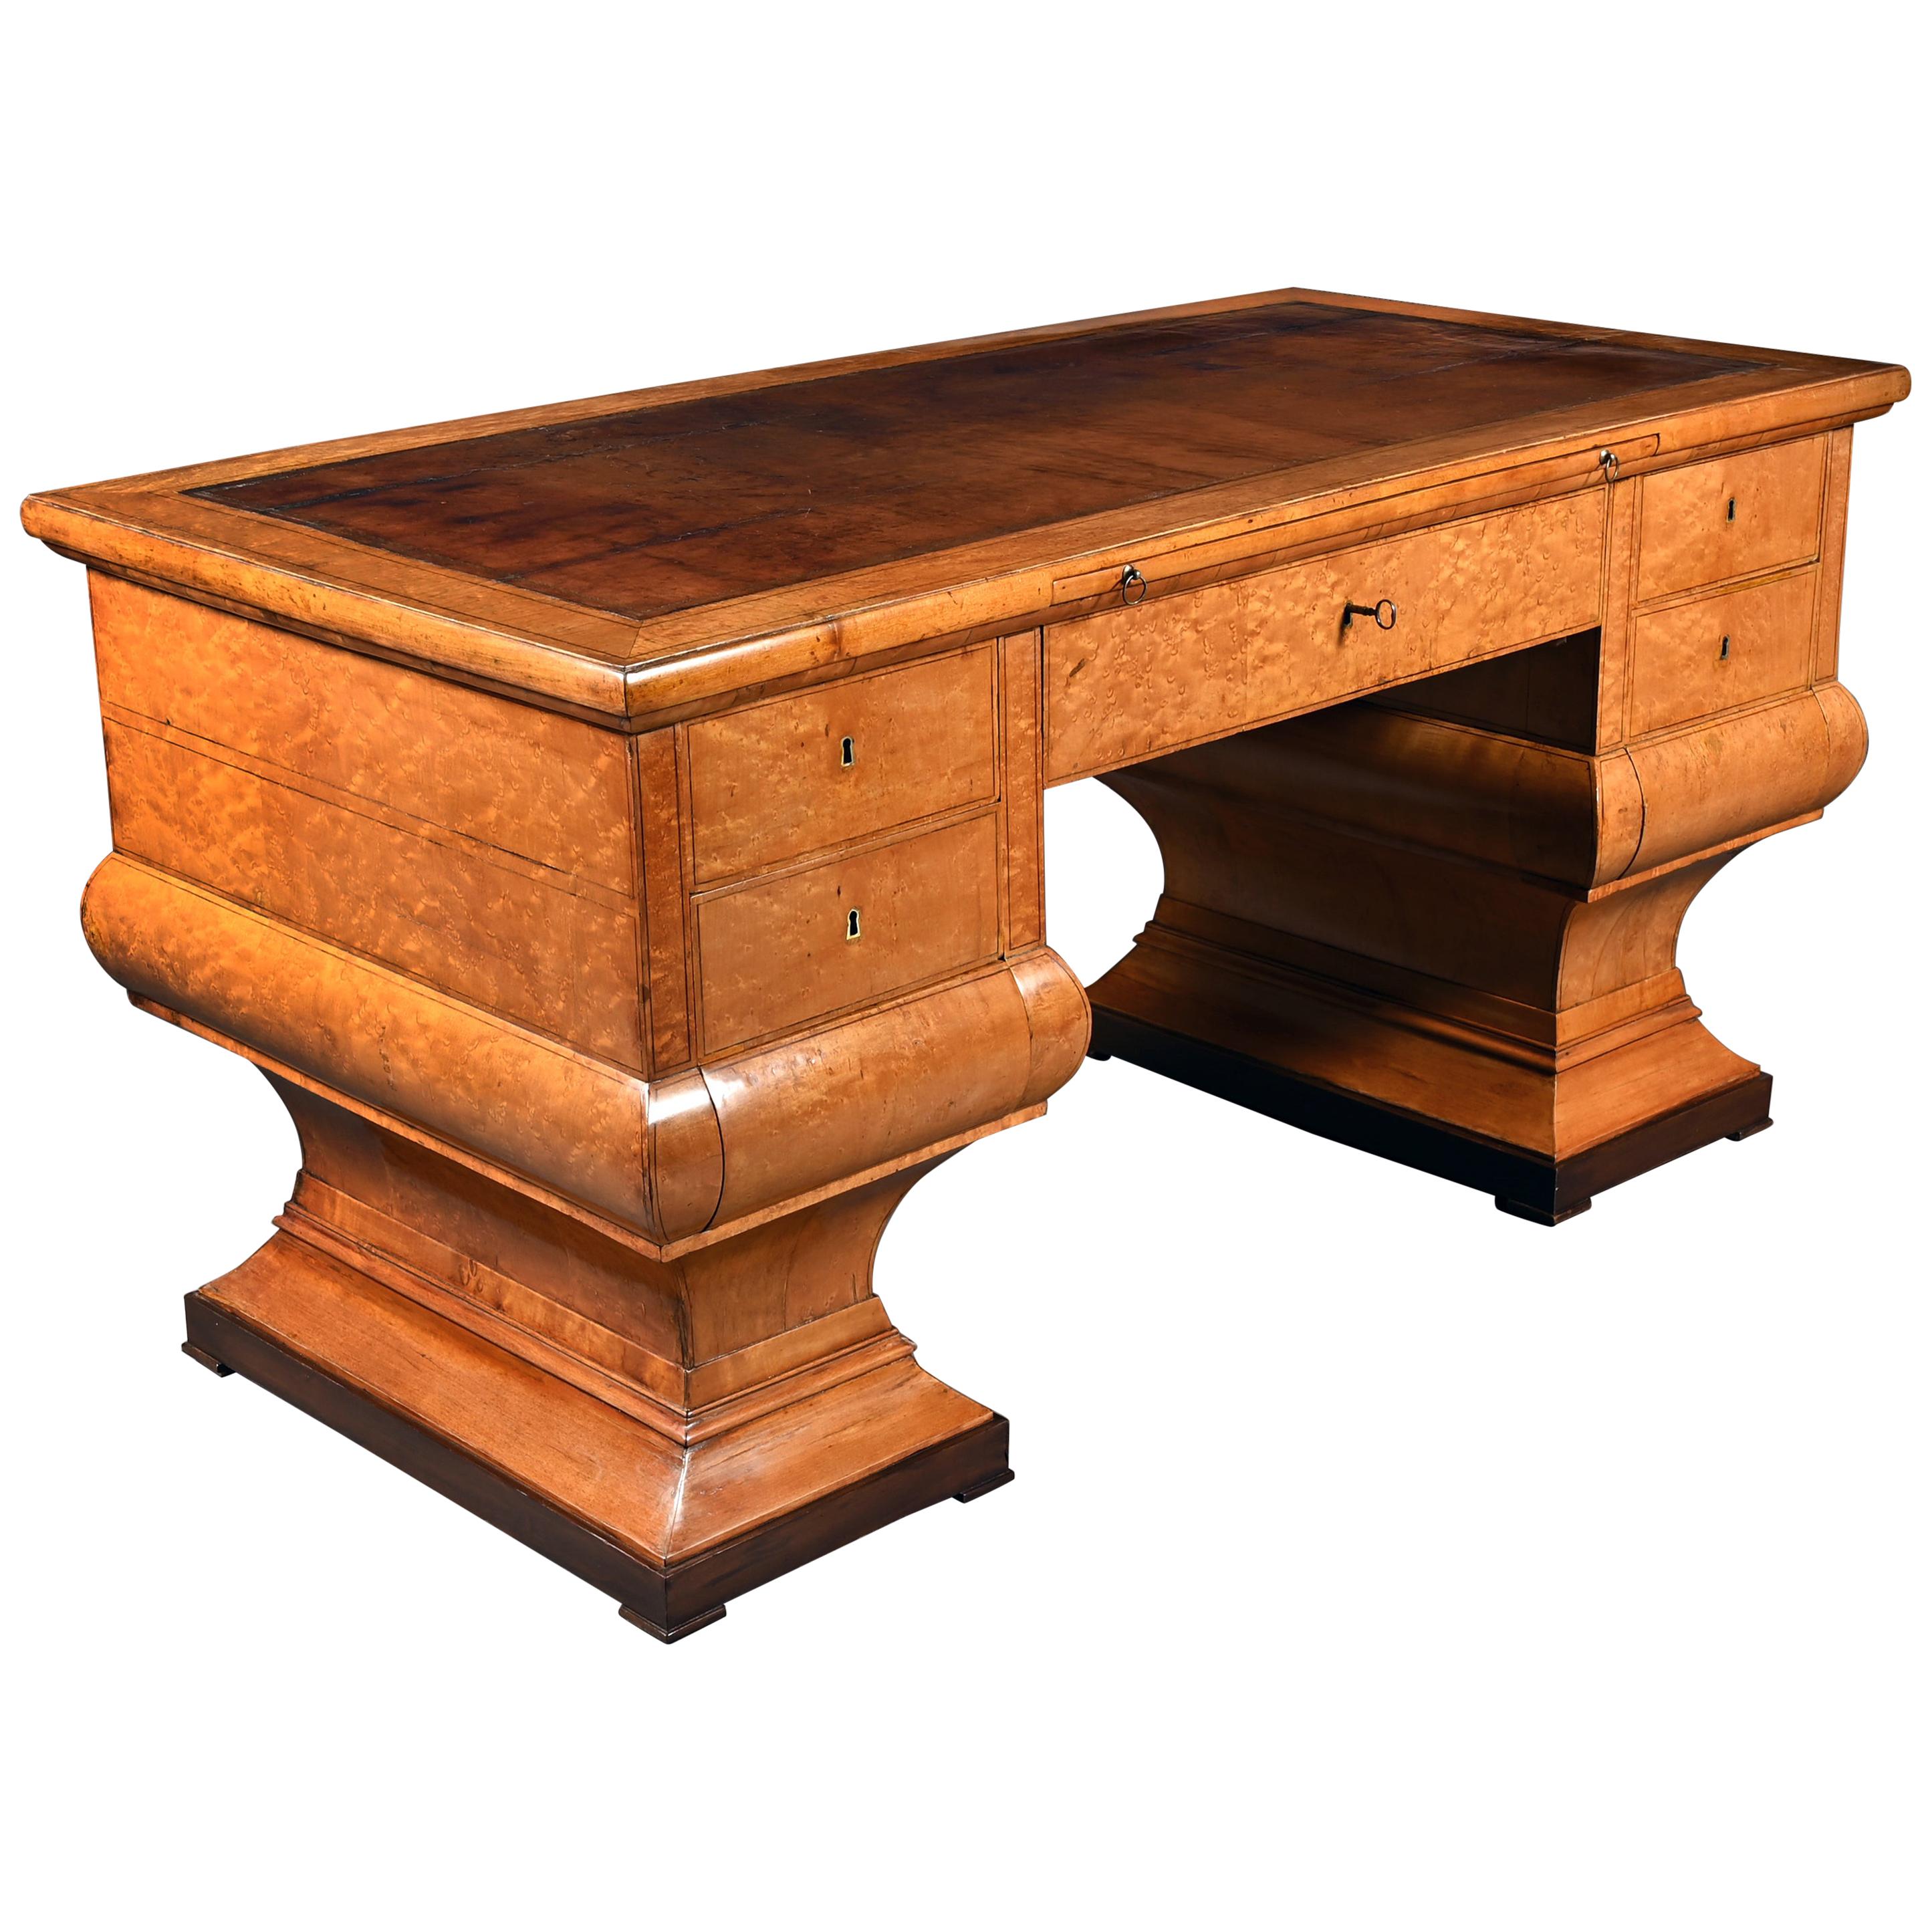 Rare Biedermeier Maple Wood Desk of Unusual Neoclassical Form, Vienna